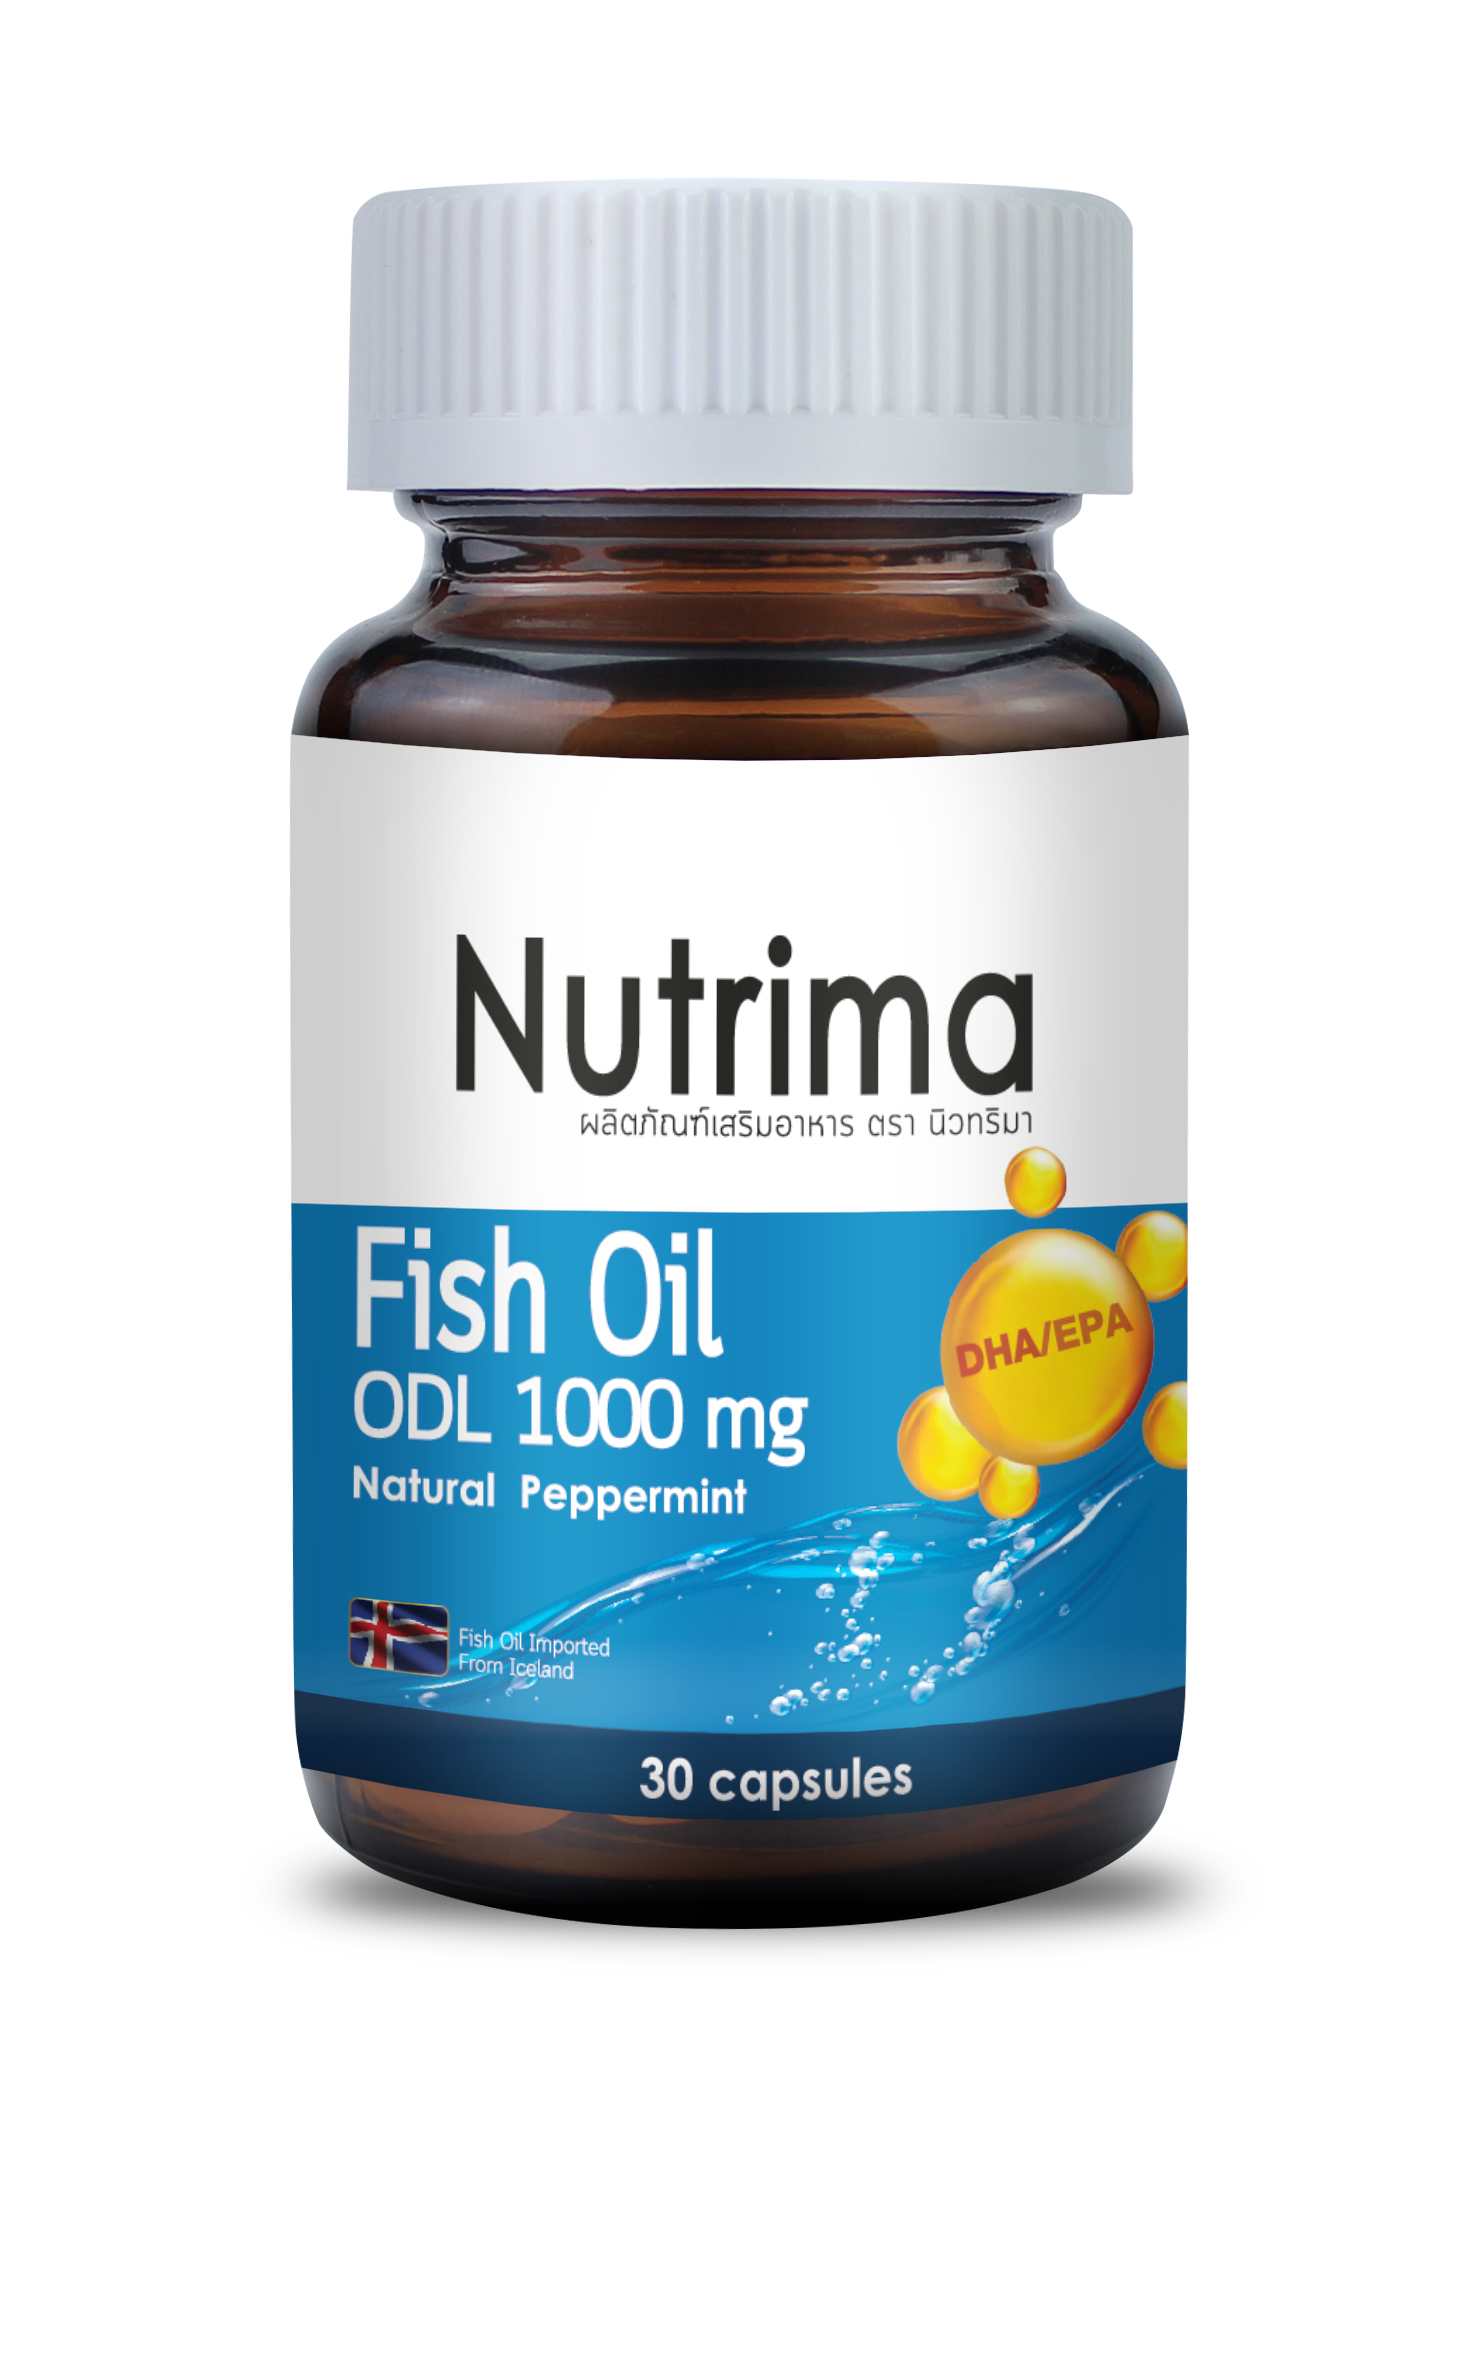 Images/Blog/15uqe4fs-NEW TD Nutrima Fish Oil ODL 1000 mg.png